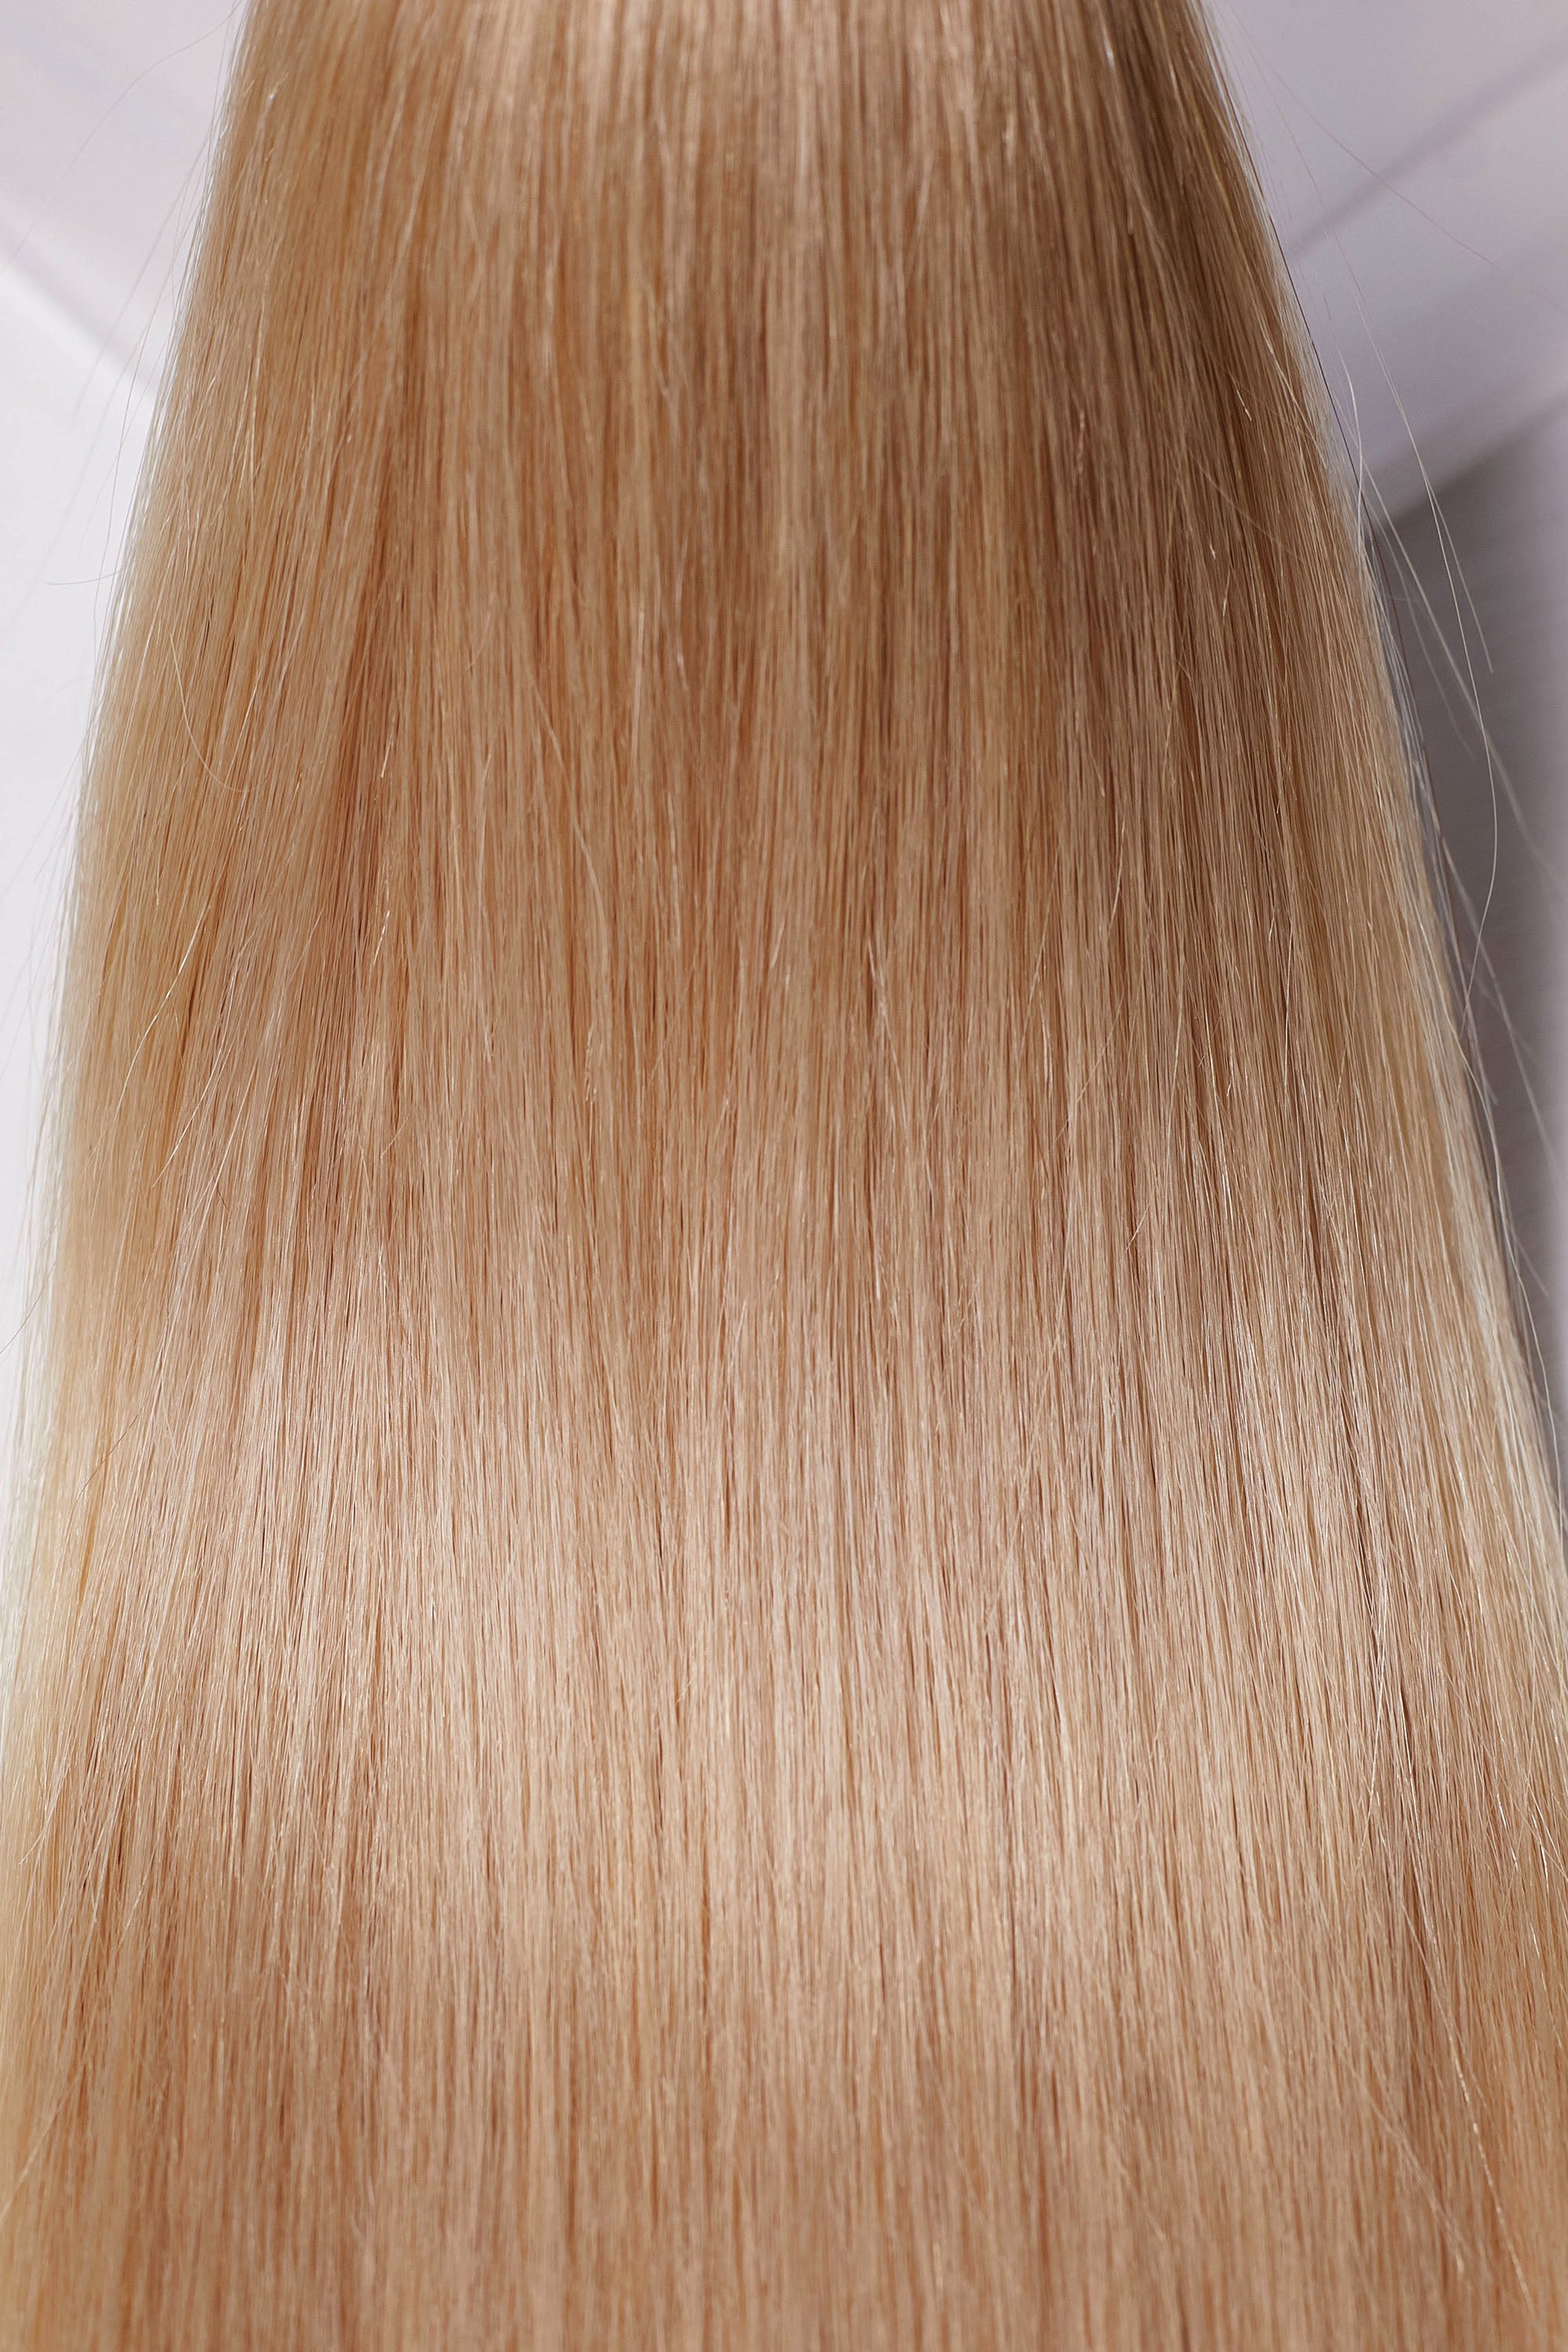 Behair professional Keratin Tip "Premium" 18" (45cm) Natural Straight Light Gold Sand #16 - 25g (Micro - 0.5g each pcs) hair extensions